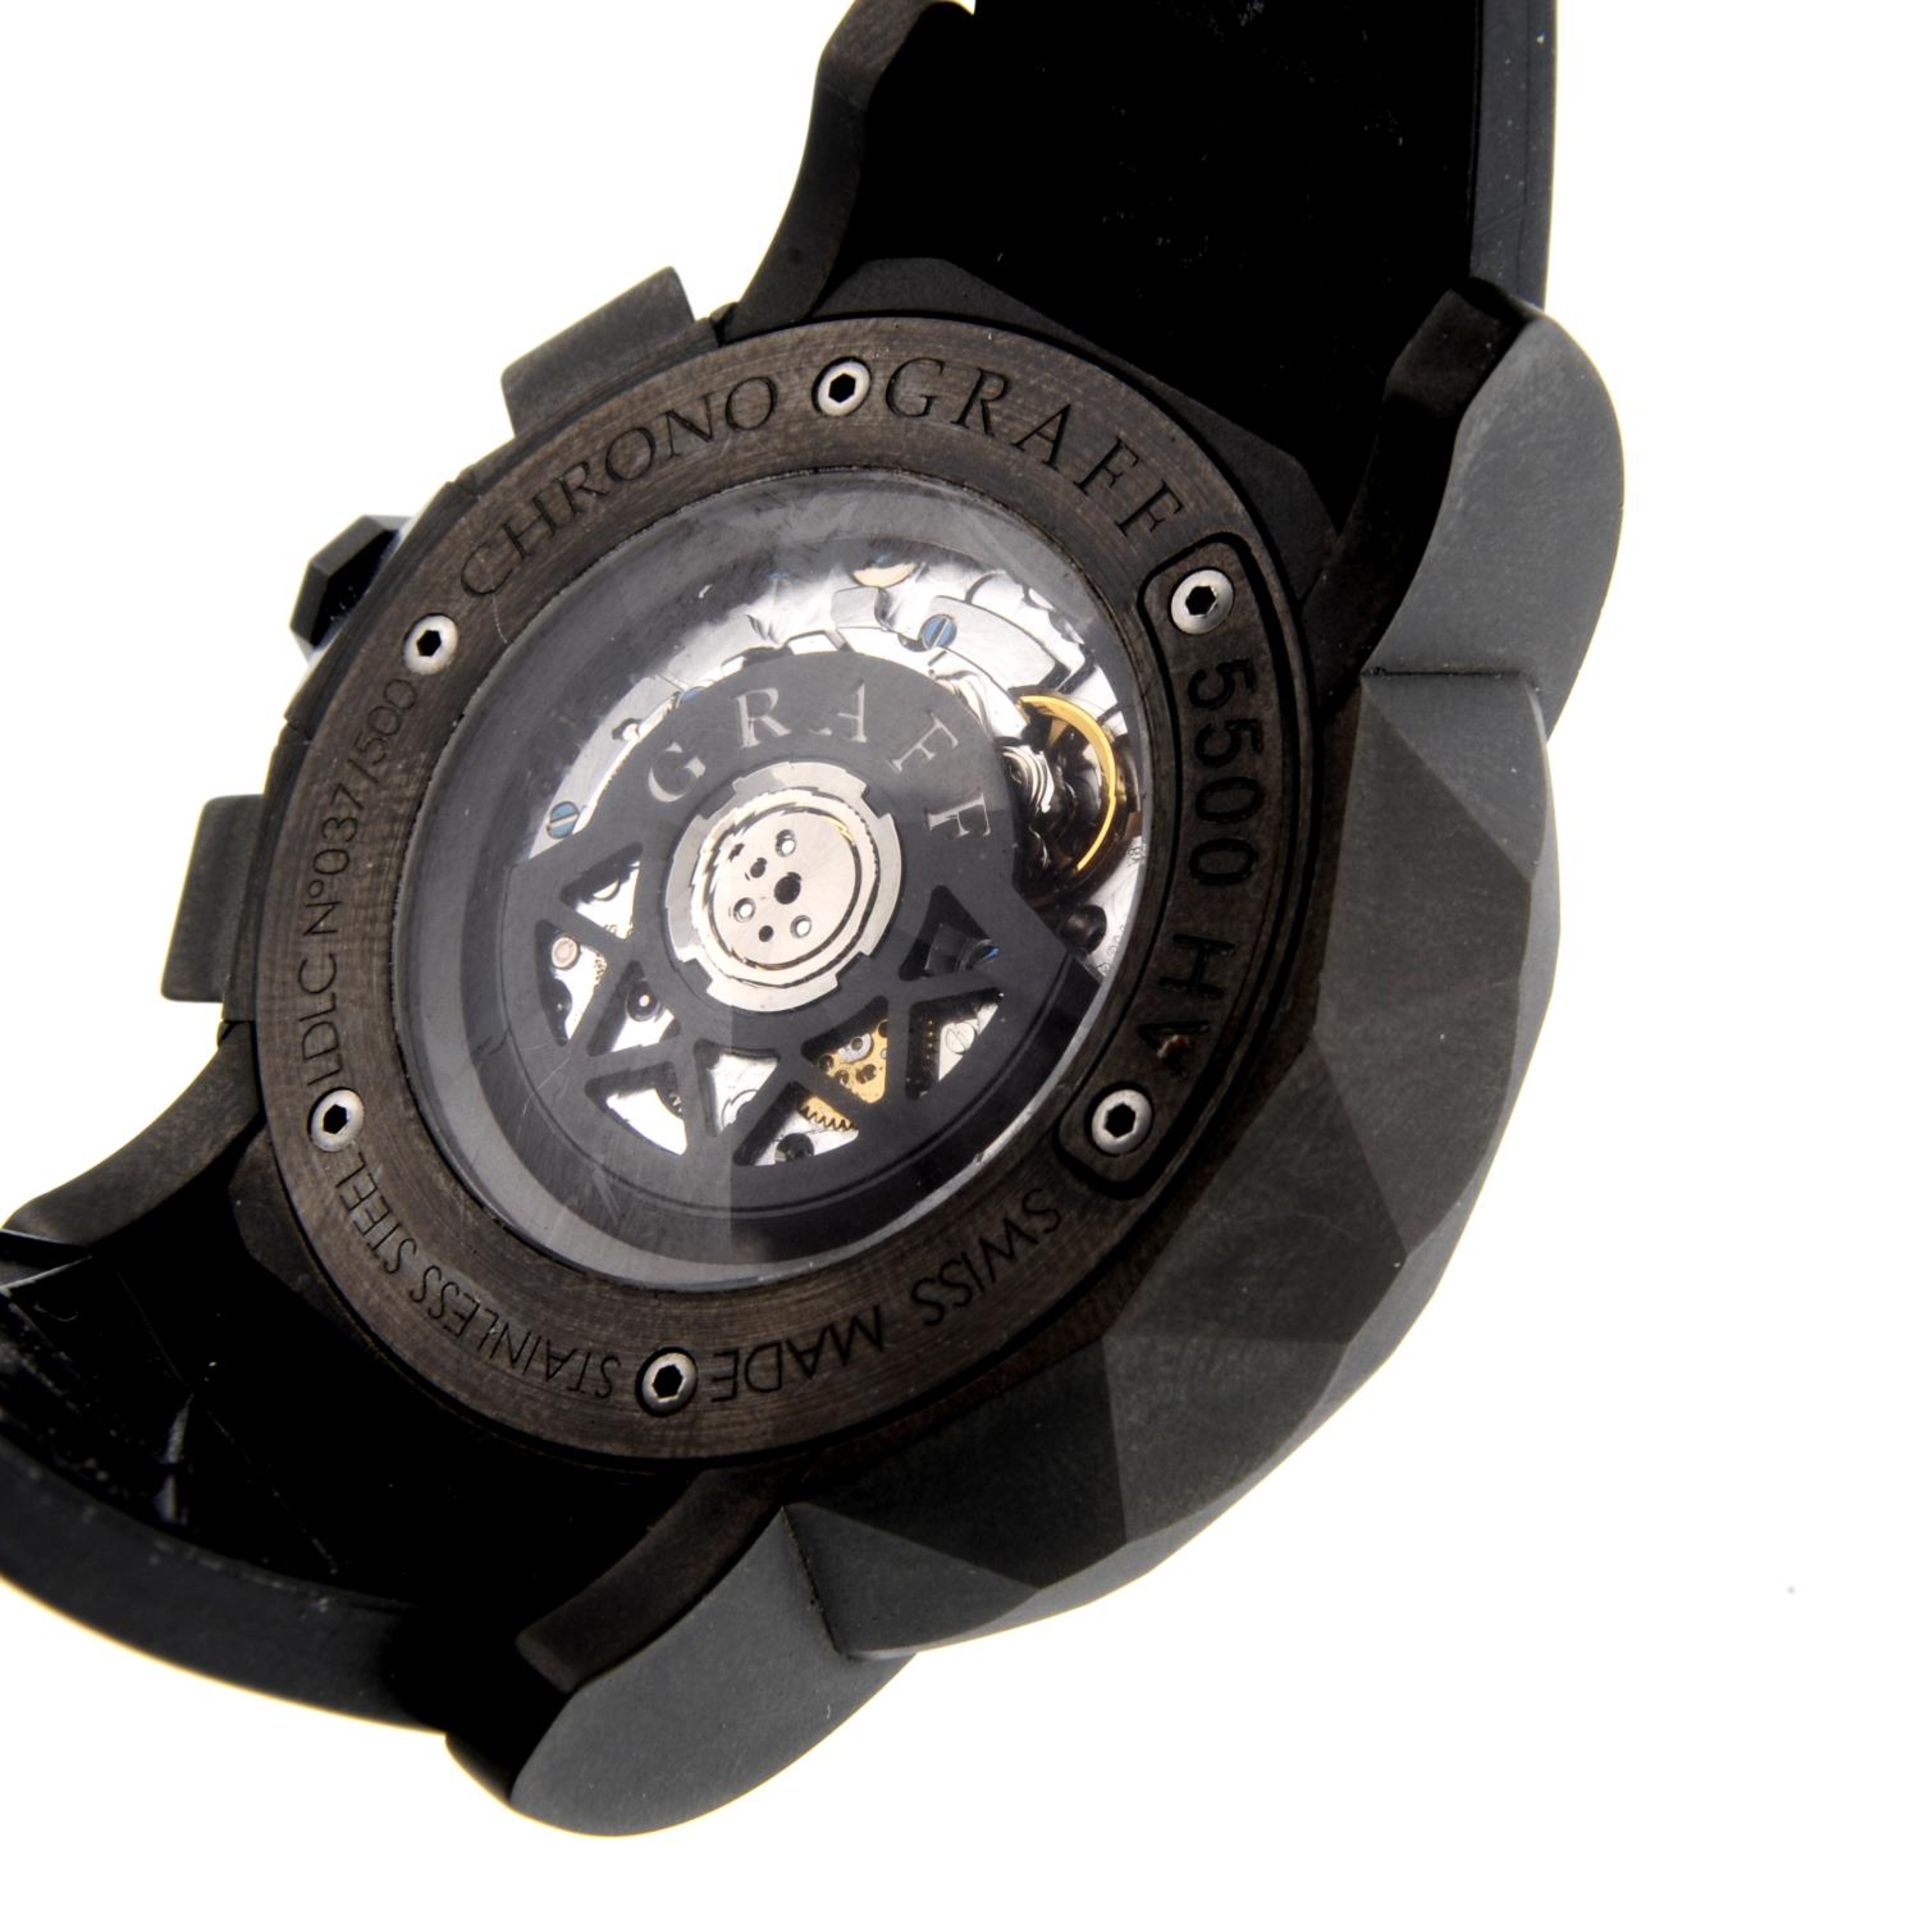 GRAFF - a limited edition gentleman's ChronoGraff chronograph wrist watch. - Bild 5 aus 5